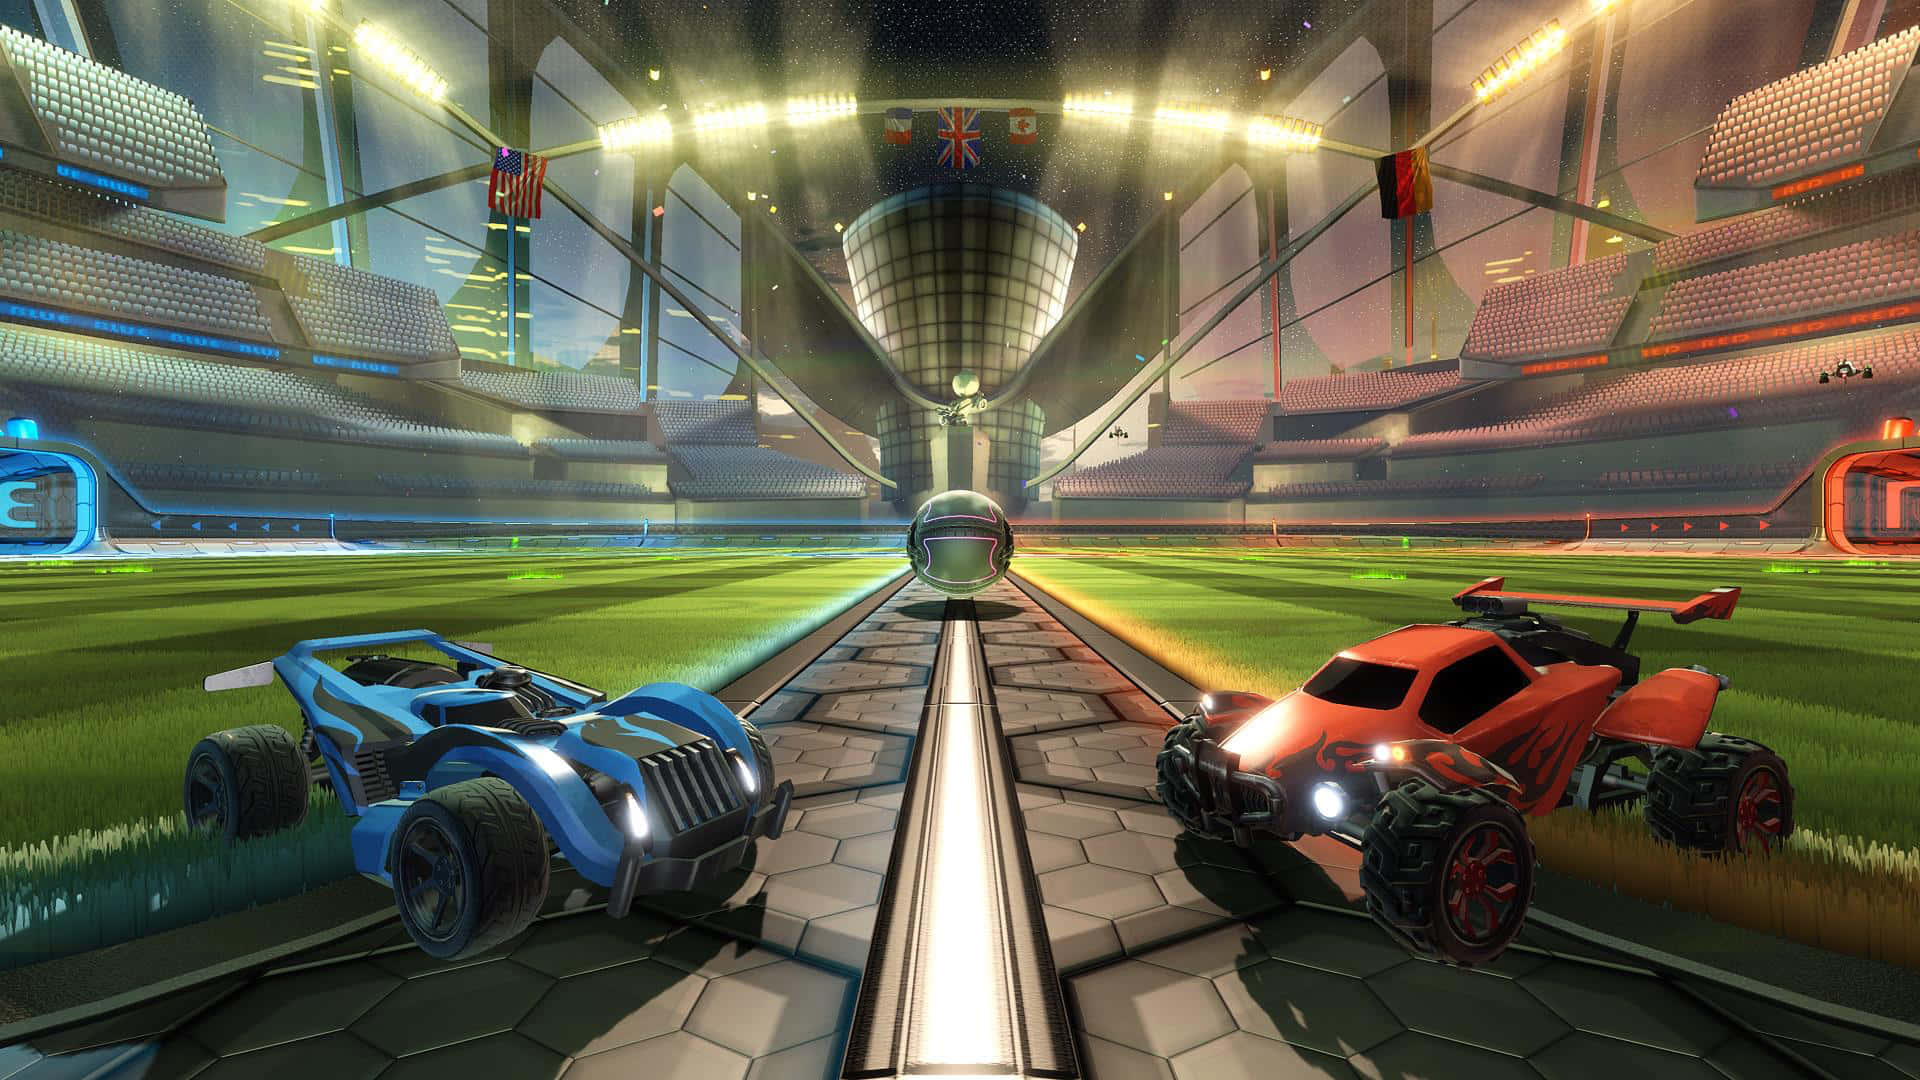 Rocket League Background Wallpaper